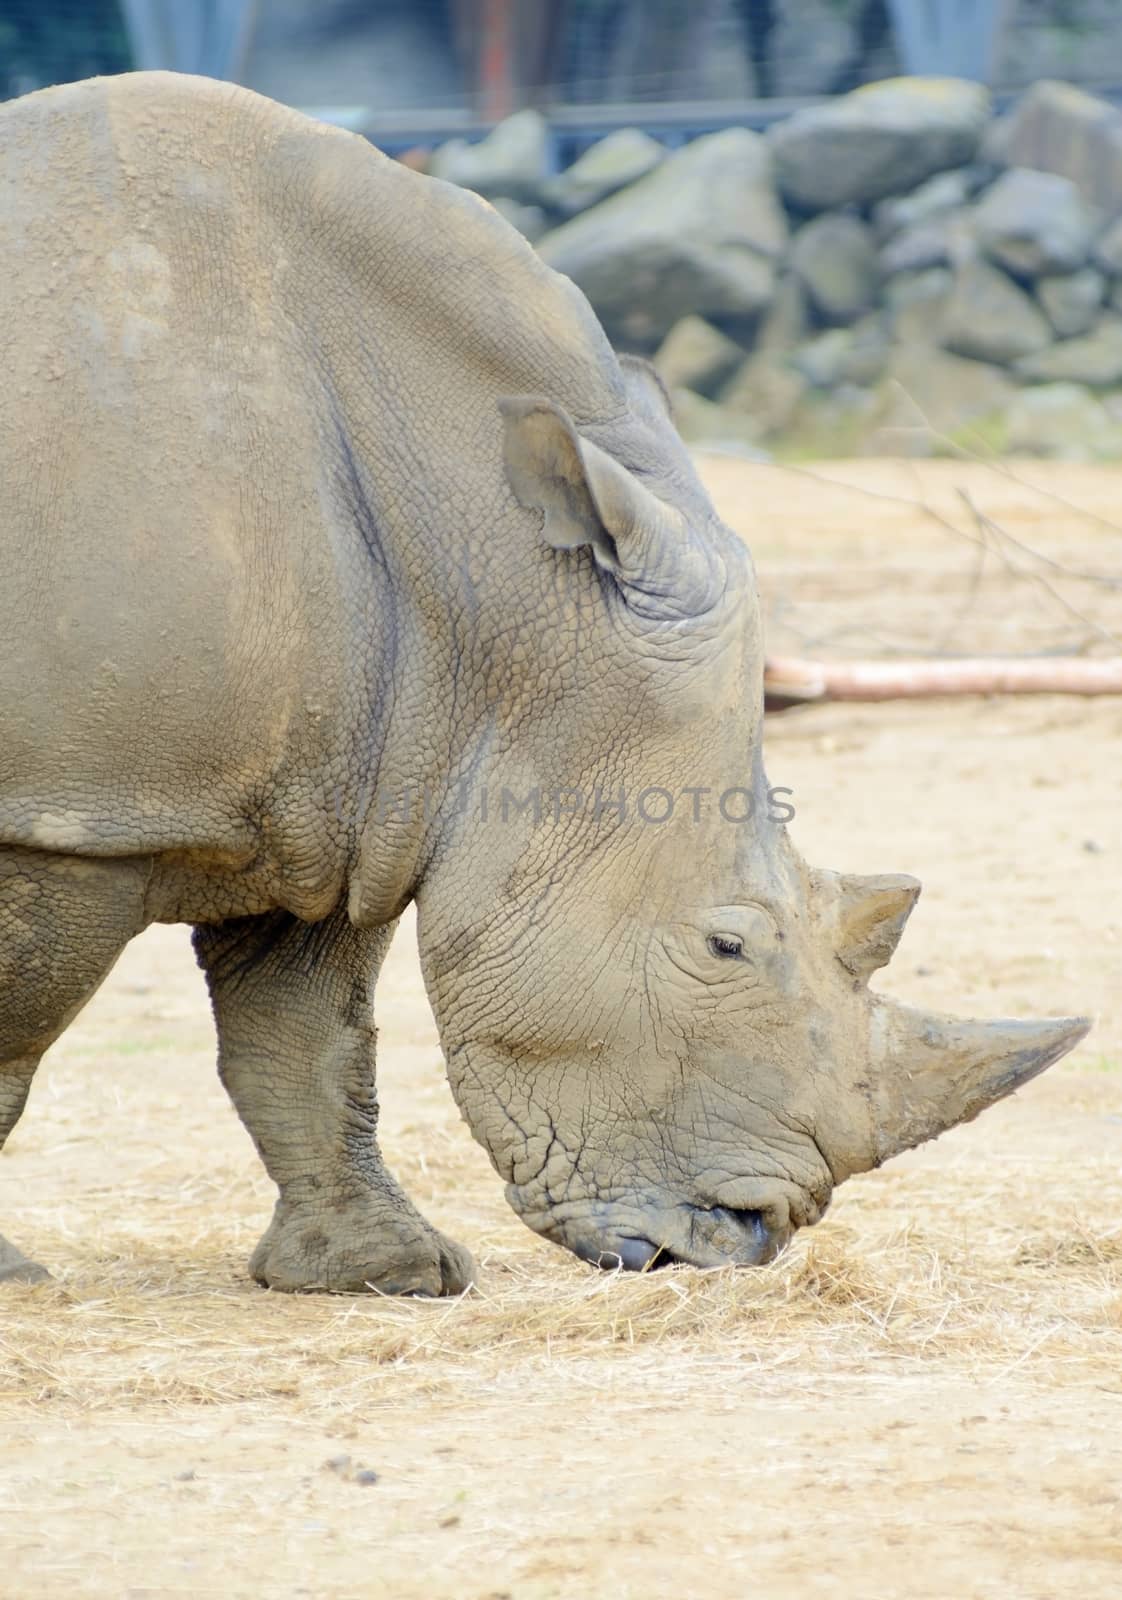 Rhino feeding by kmwphotography